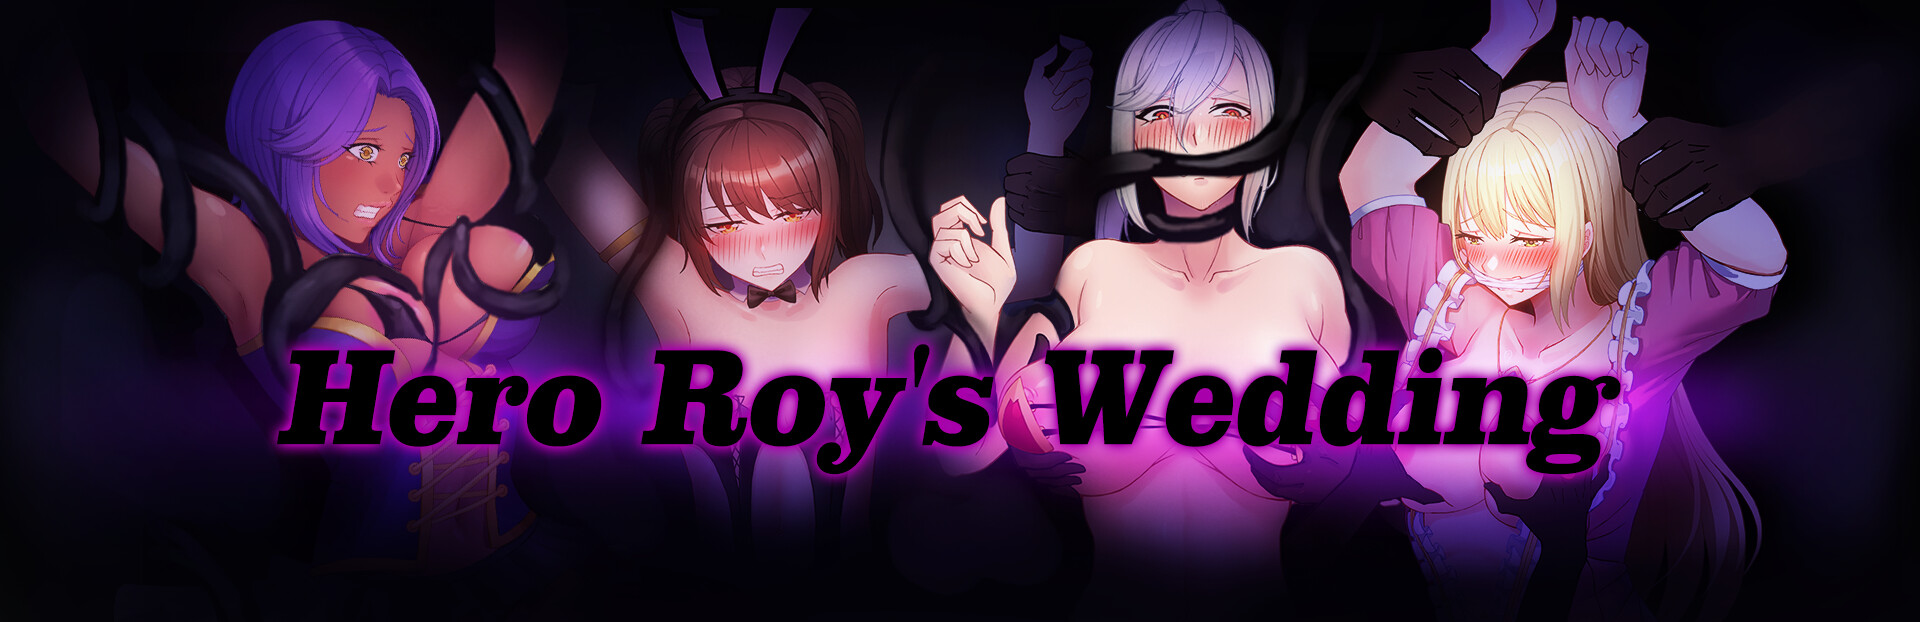 Wedding Sex Games - Download Free Hentai Game Porn Games Hero Roy's Wedding